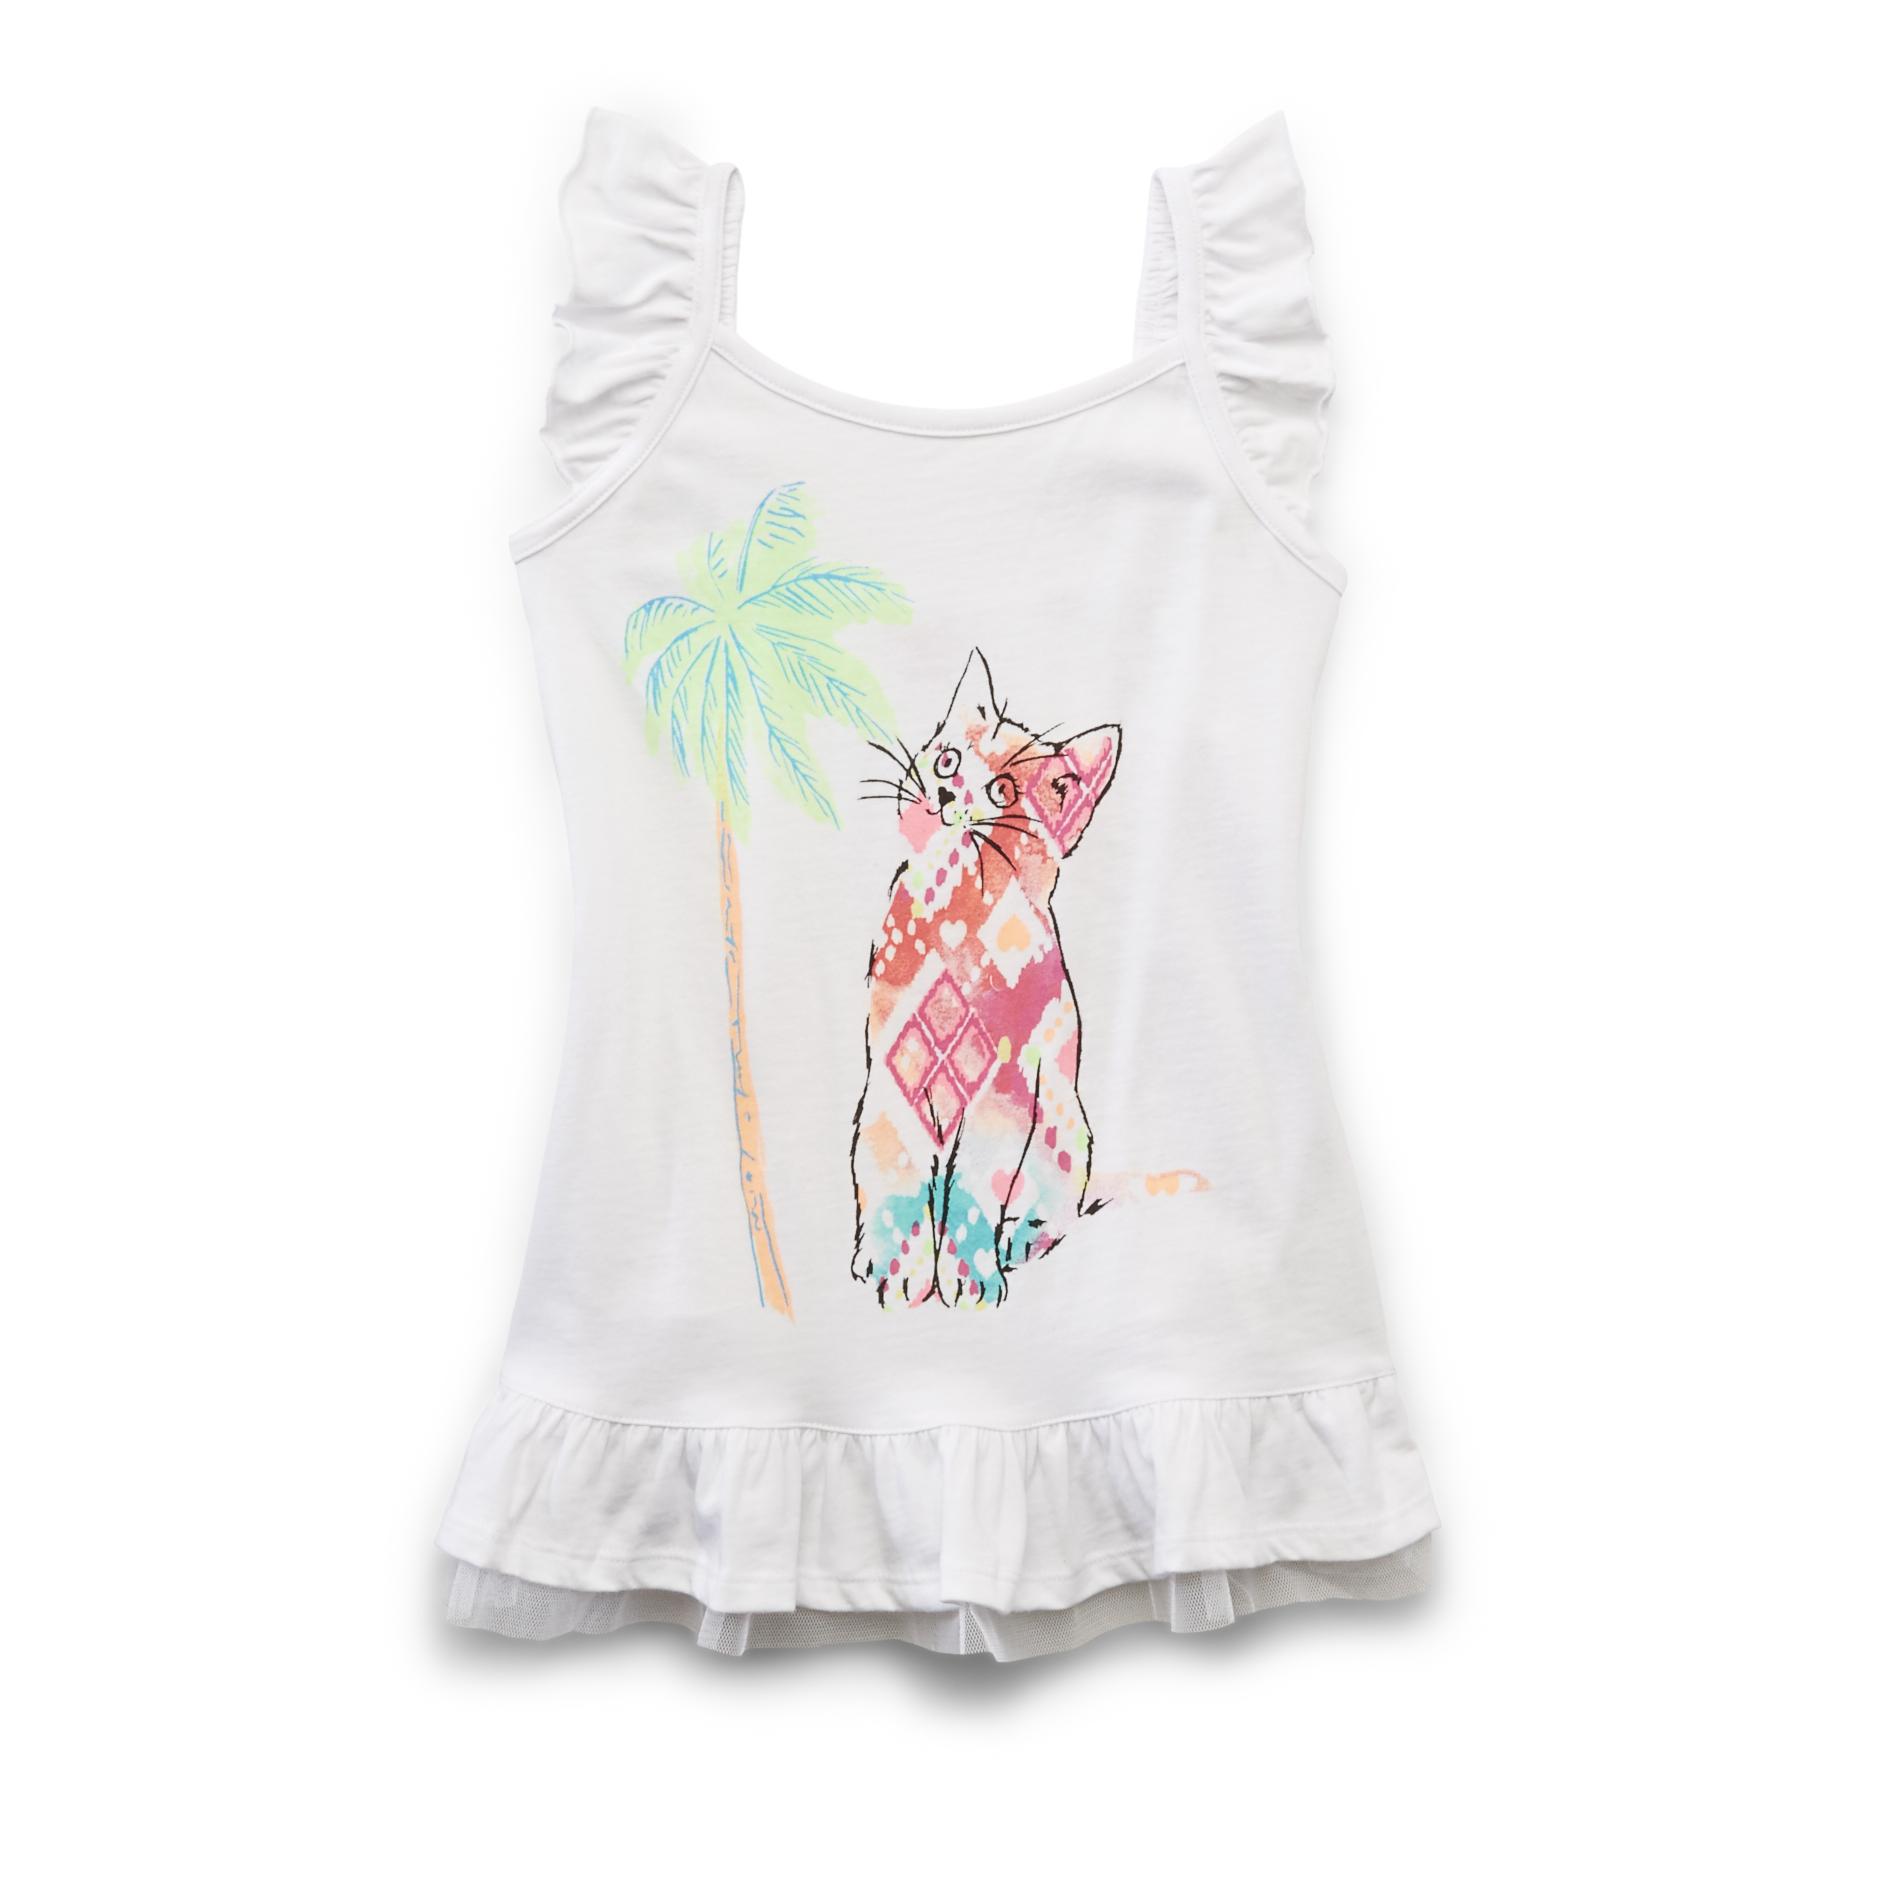 Toughskins Girl's Flutter Tunic - Neon Cat & Palm Tree